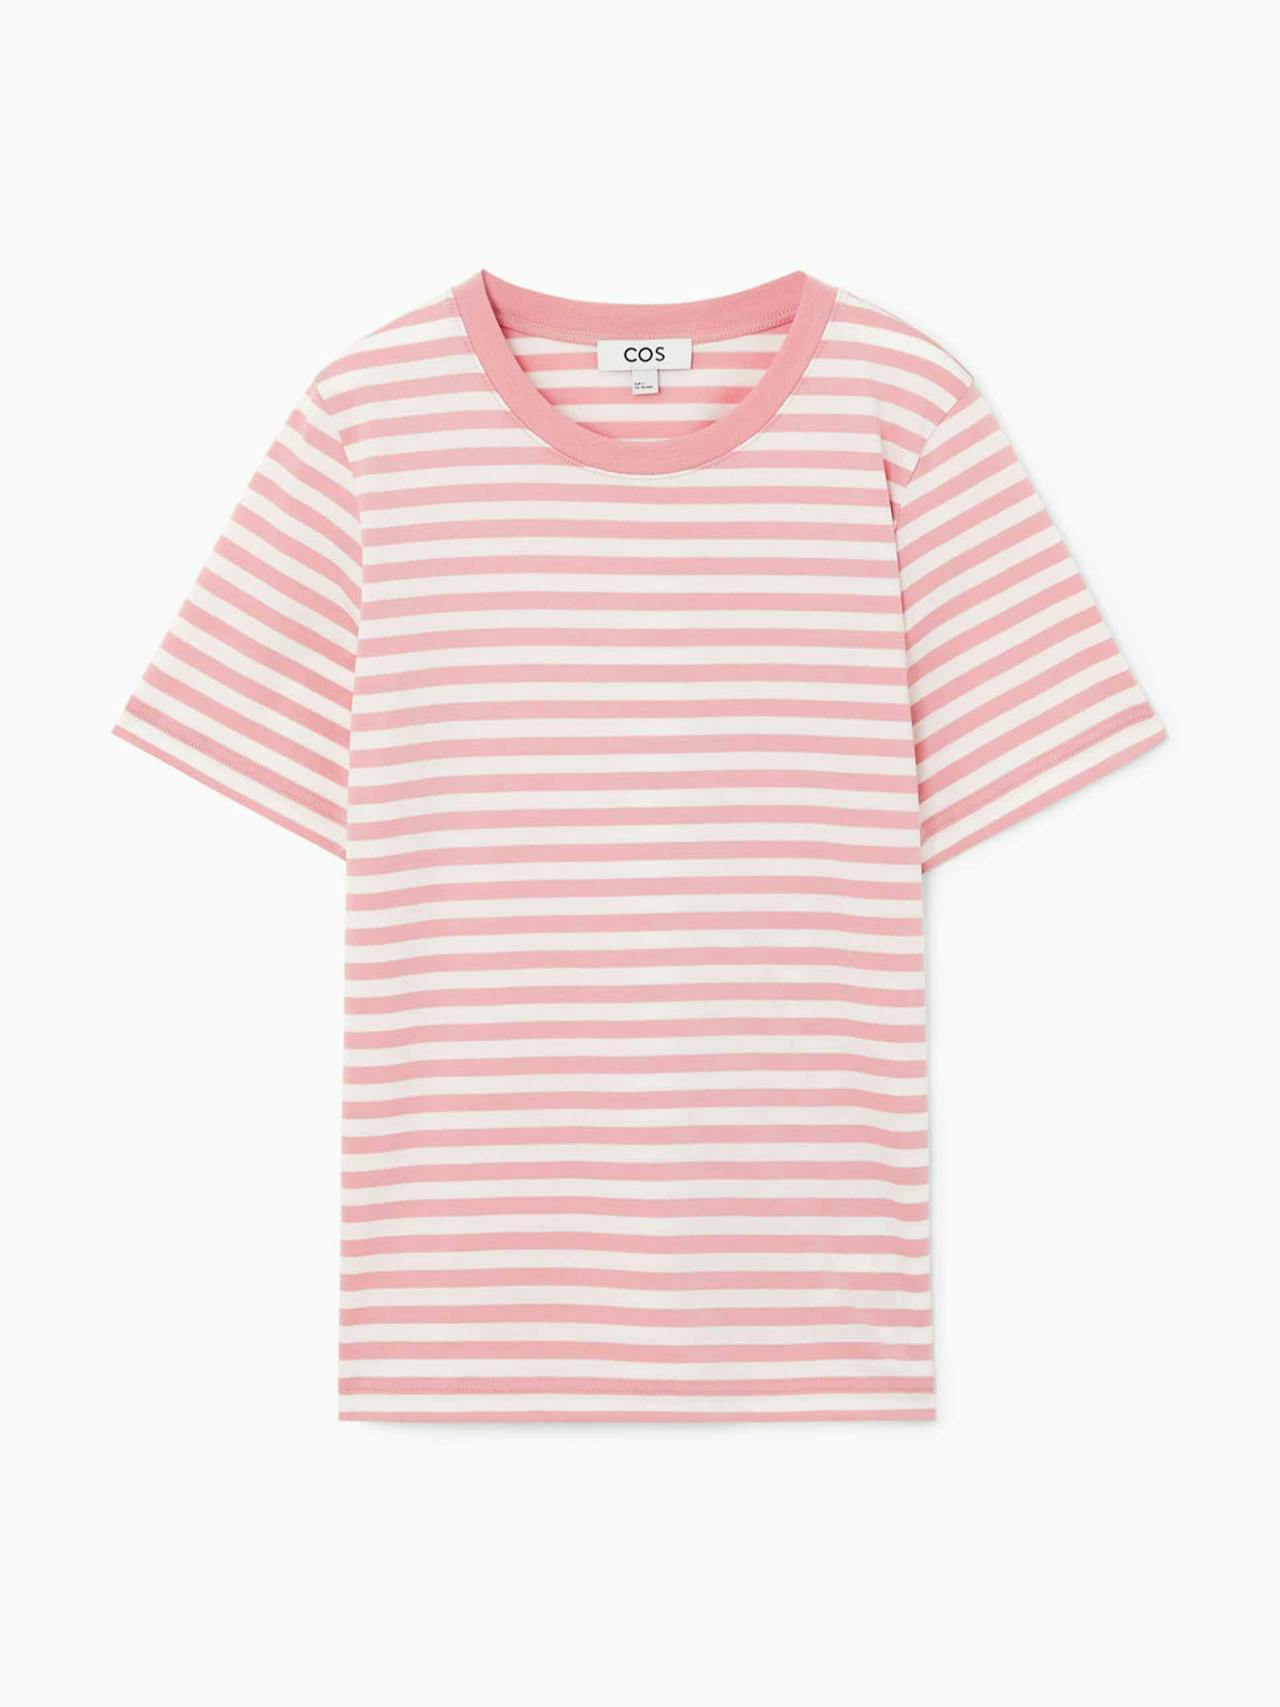 Striped pink t-shirt